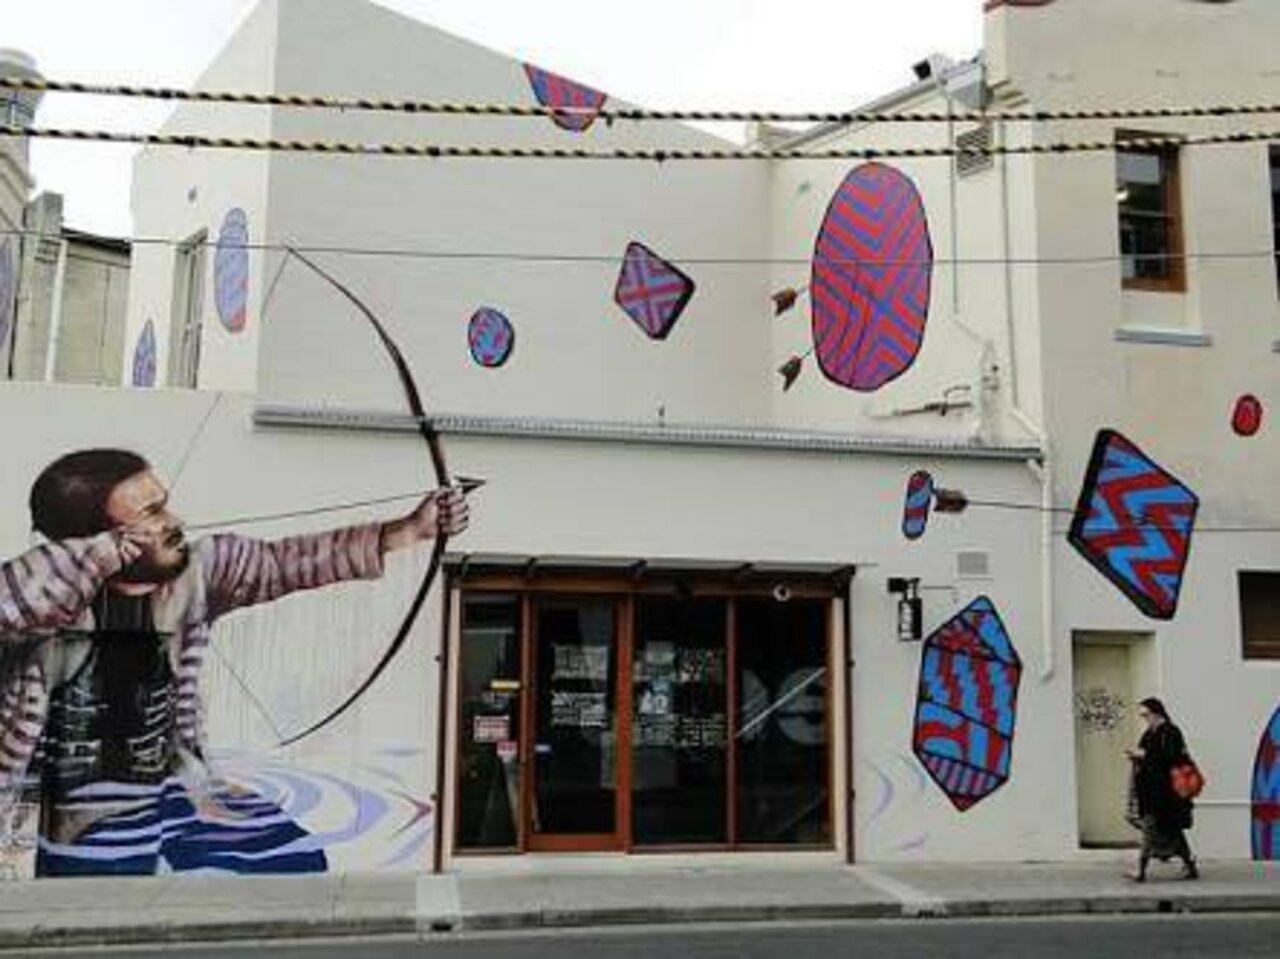 Mural by Fintan Magee, Sydney, Australia #Streetart #urbanart #graffiti #mural #art #Sydney #Australia https://t.co/4wfPy8M06c